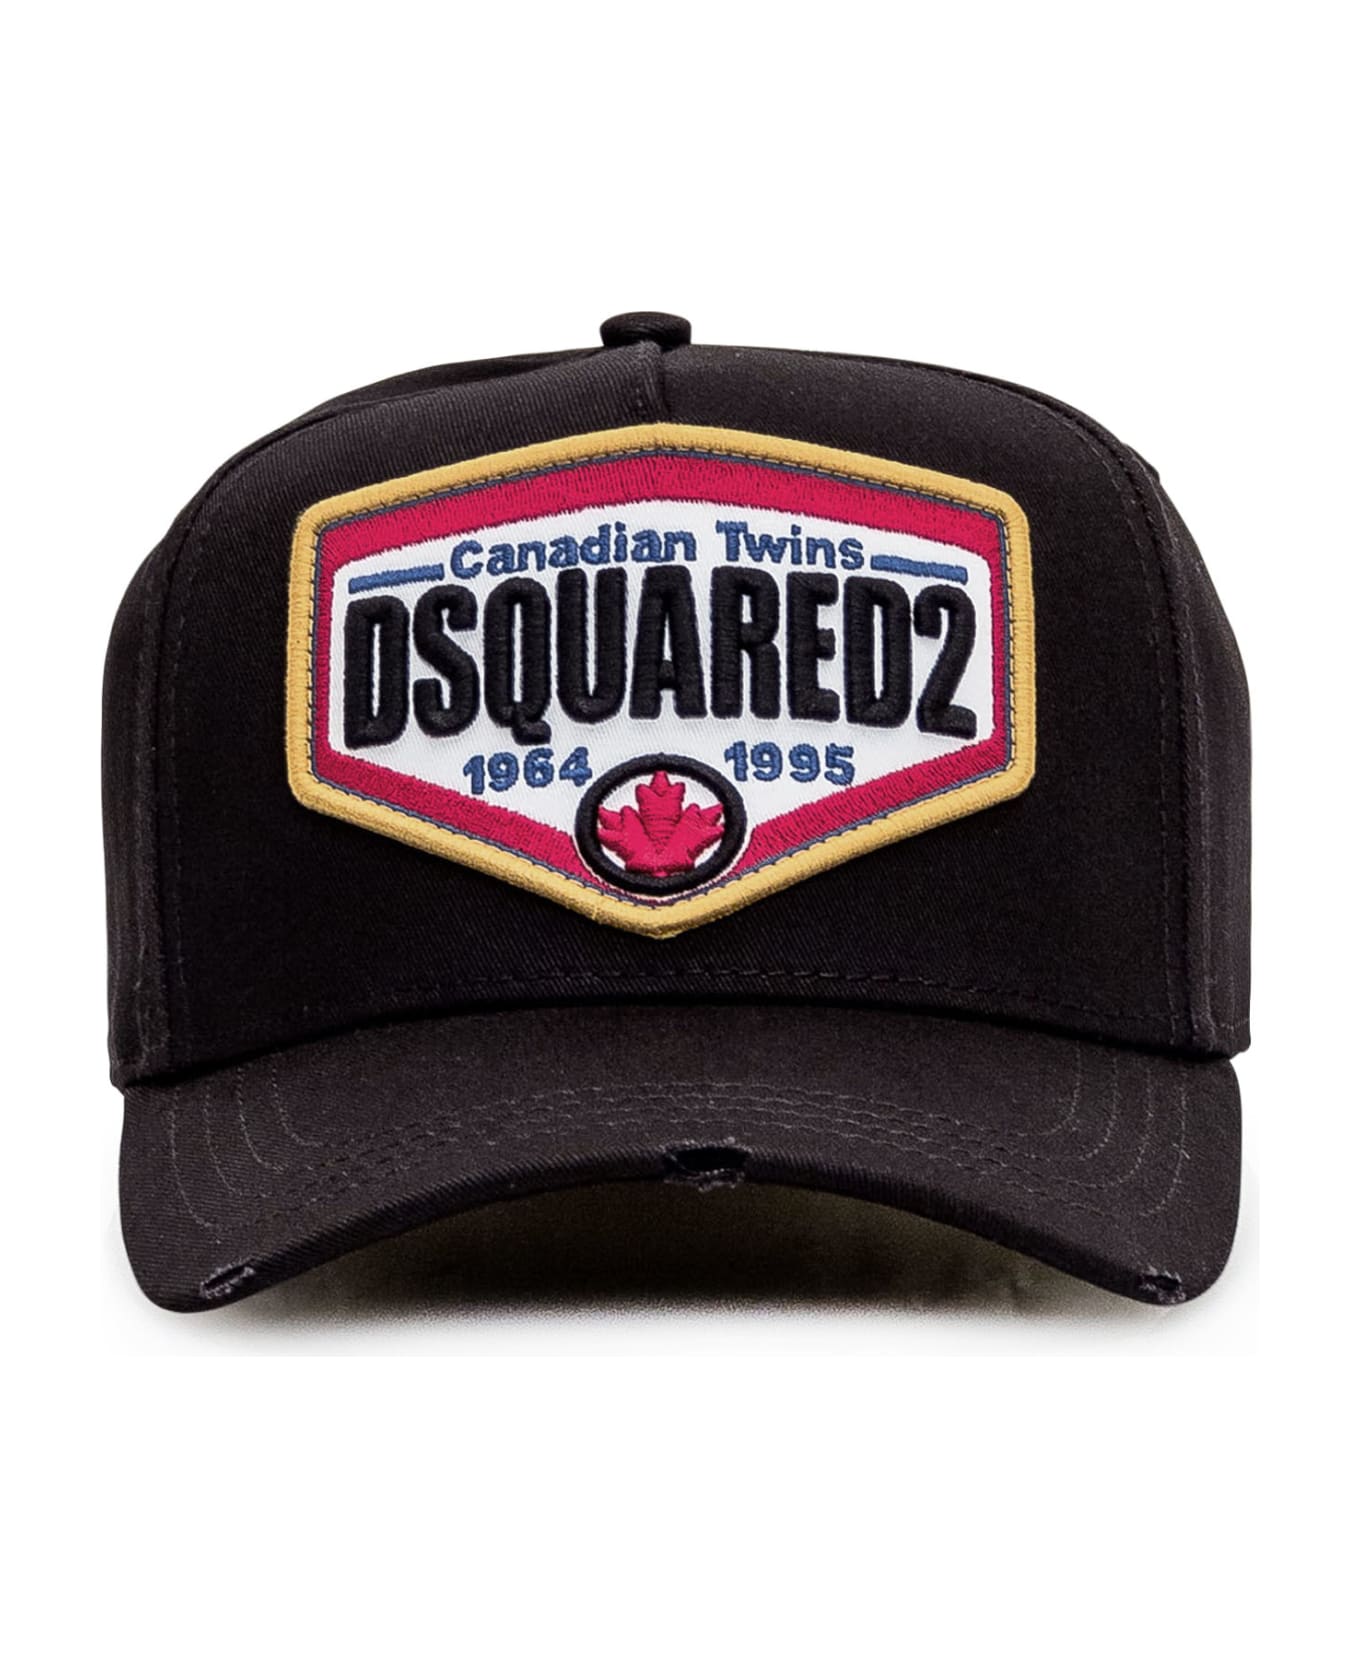 Dsquared2 Logo Baseball Cap - NERO